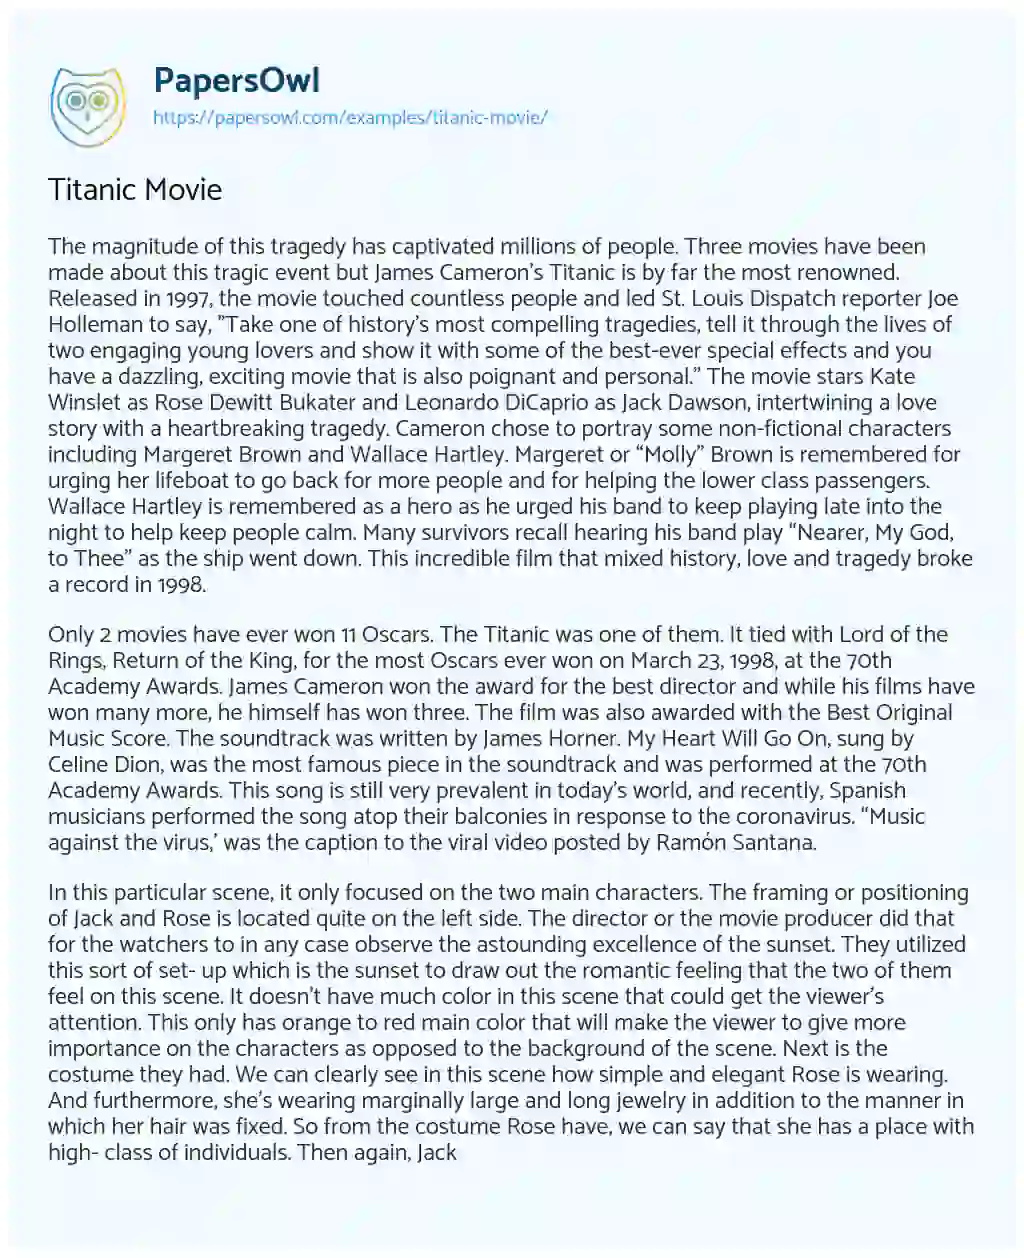 Titanic Movie - Free Essay Example - 980 Words 